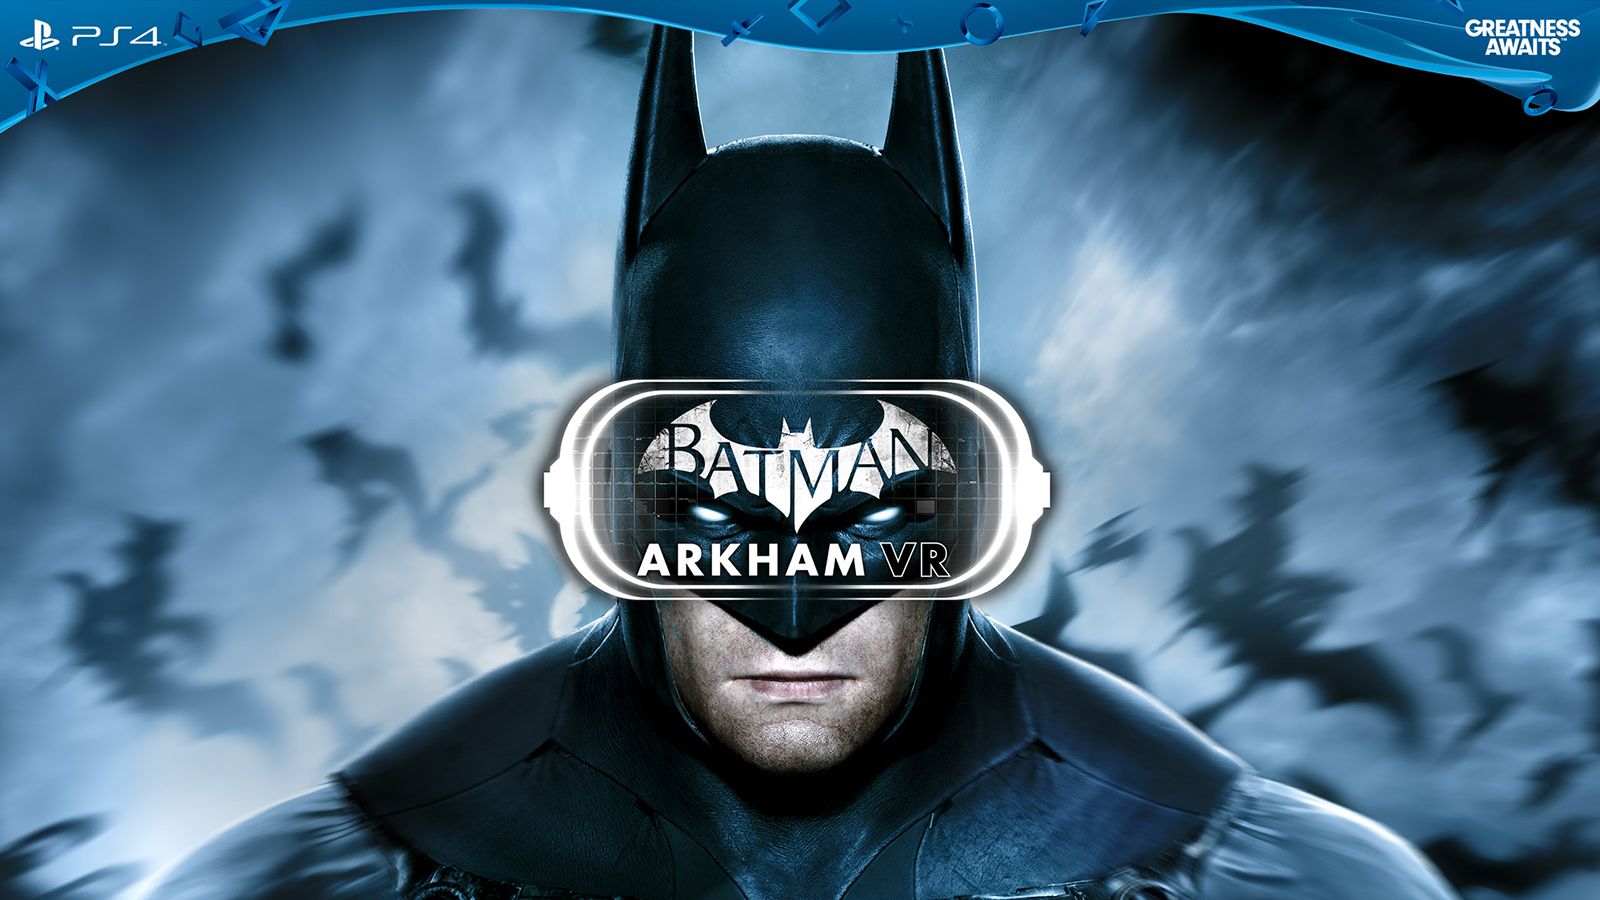 virtual reality needs a defining game says batman arkham vr publisher image 1